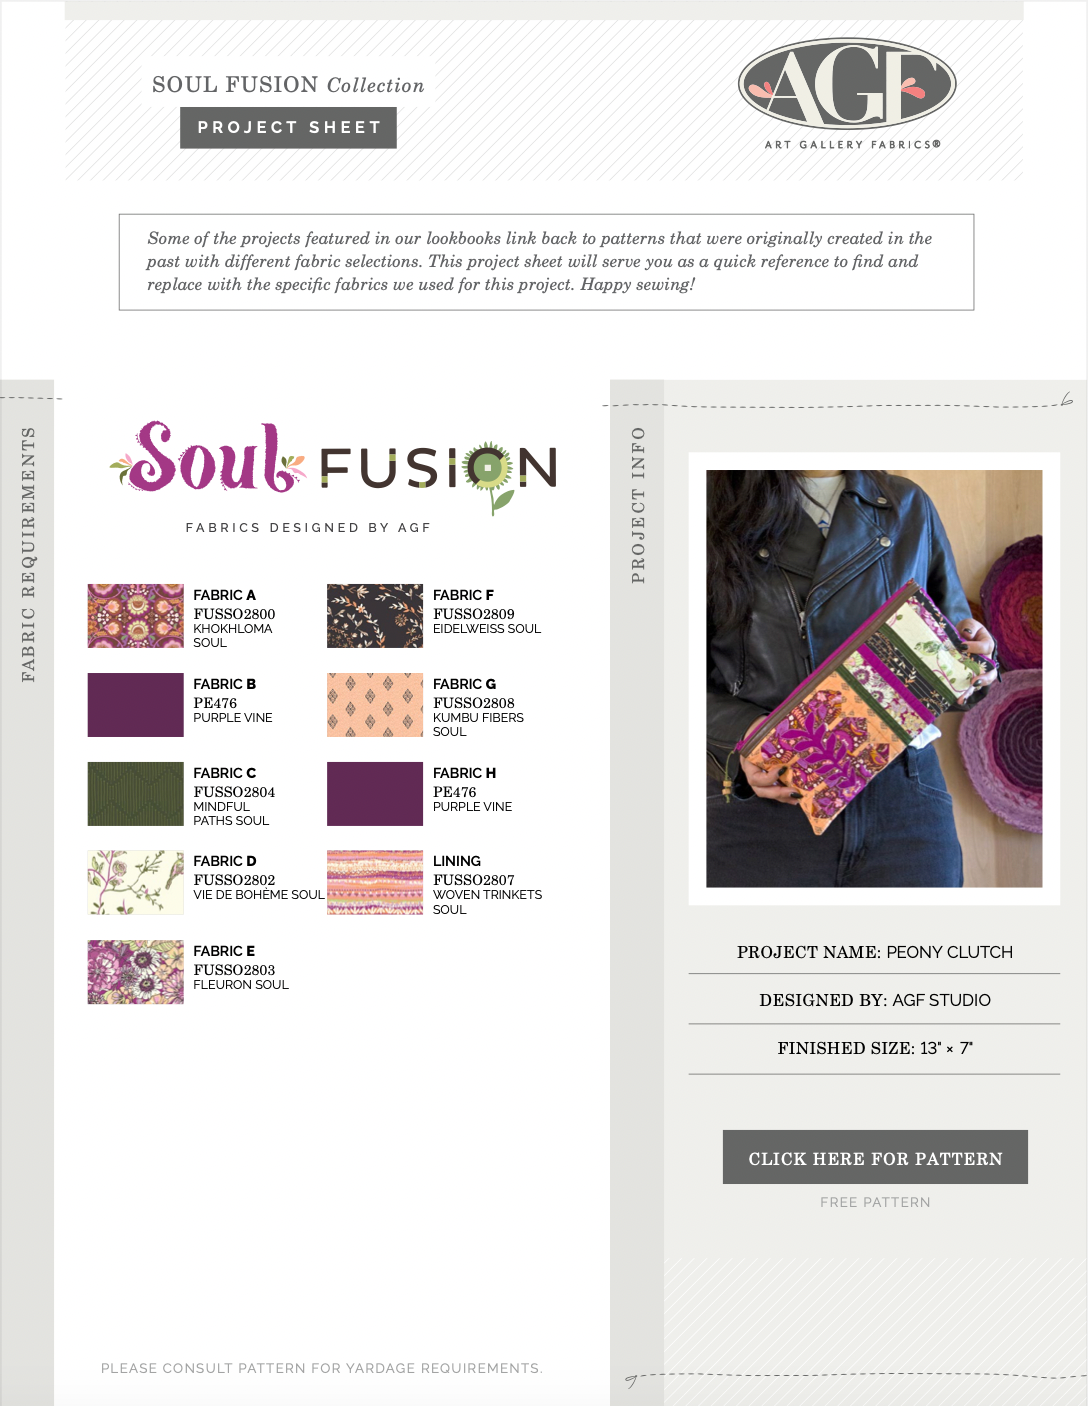 Soul Fusion by AGF Studio : Peony Clutch Kit